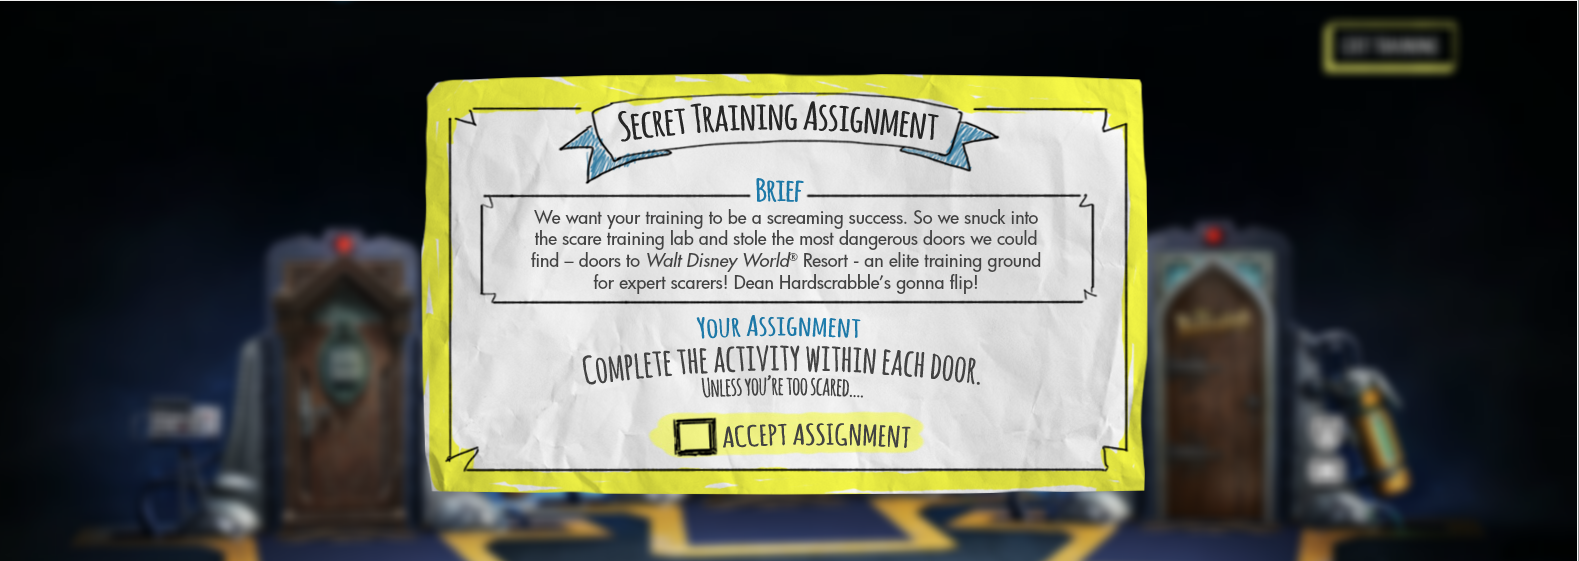 secret training assignment.PNG